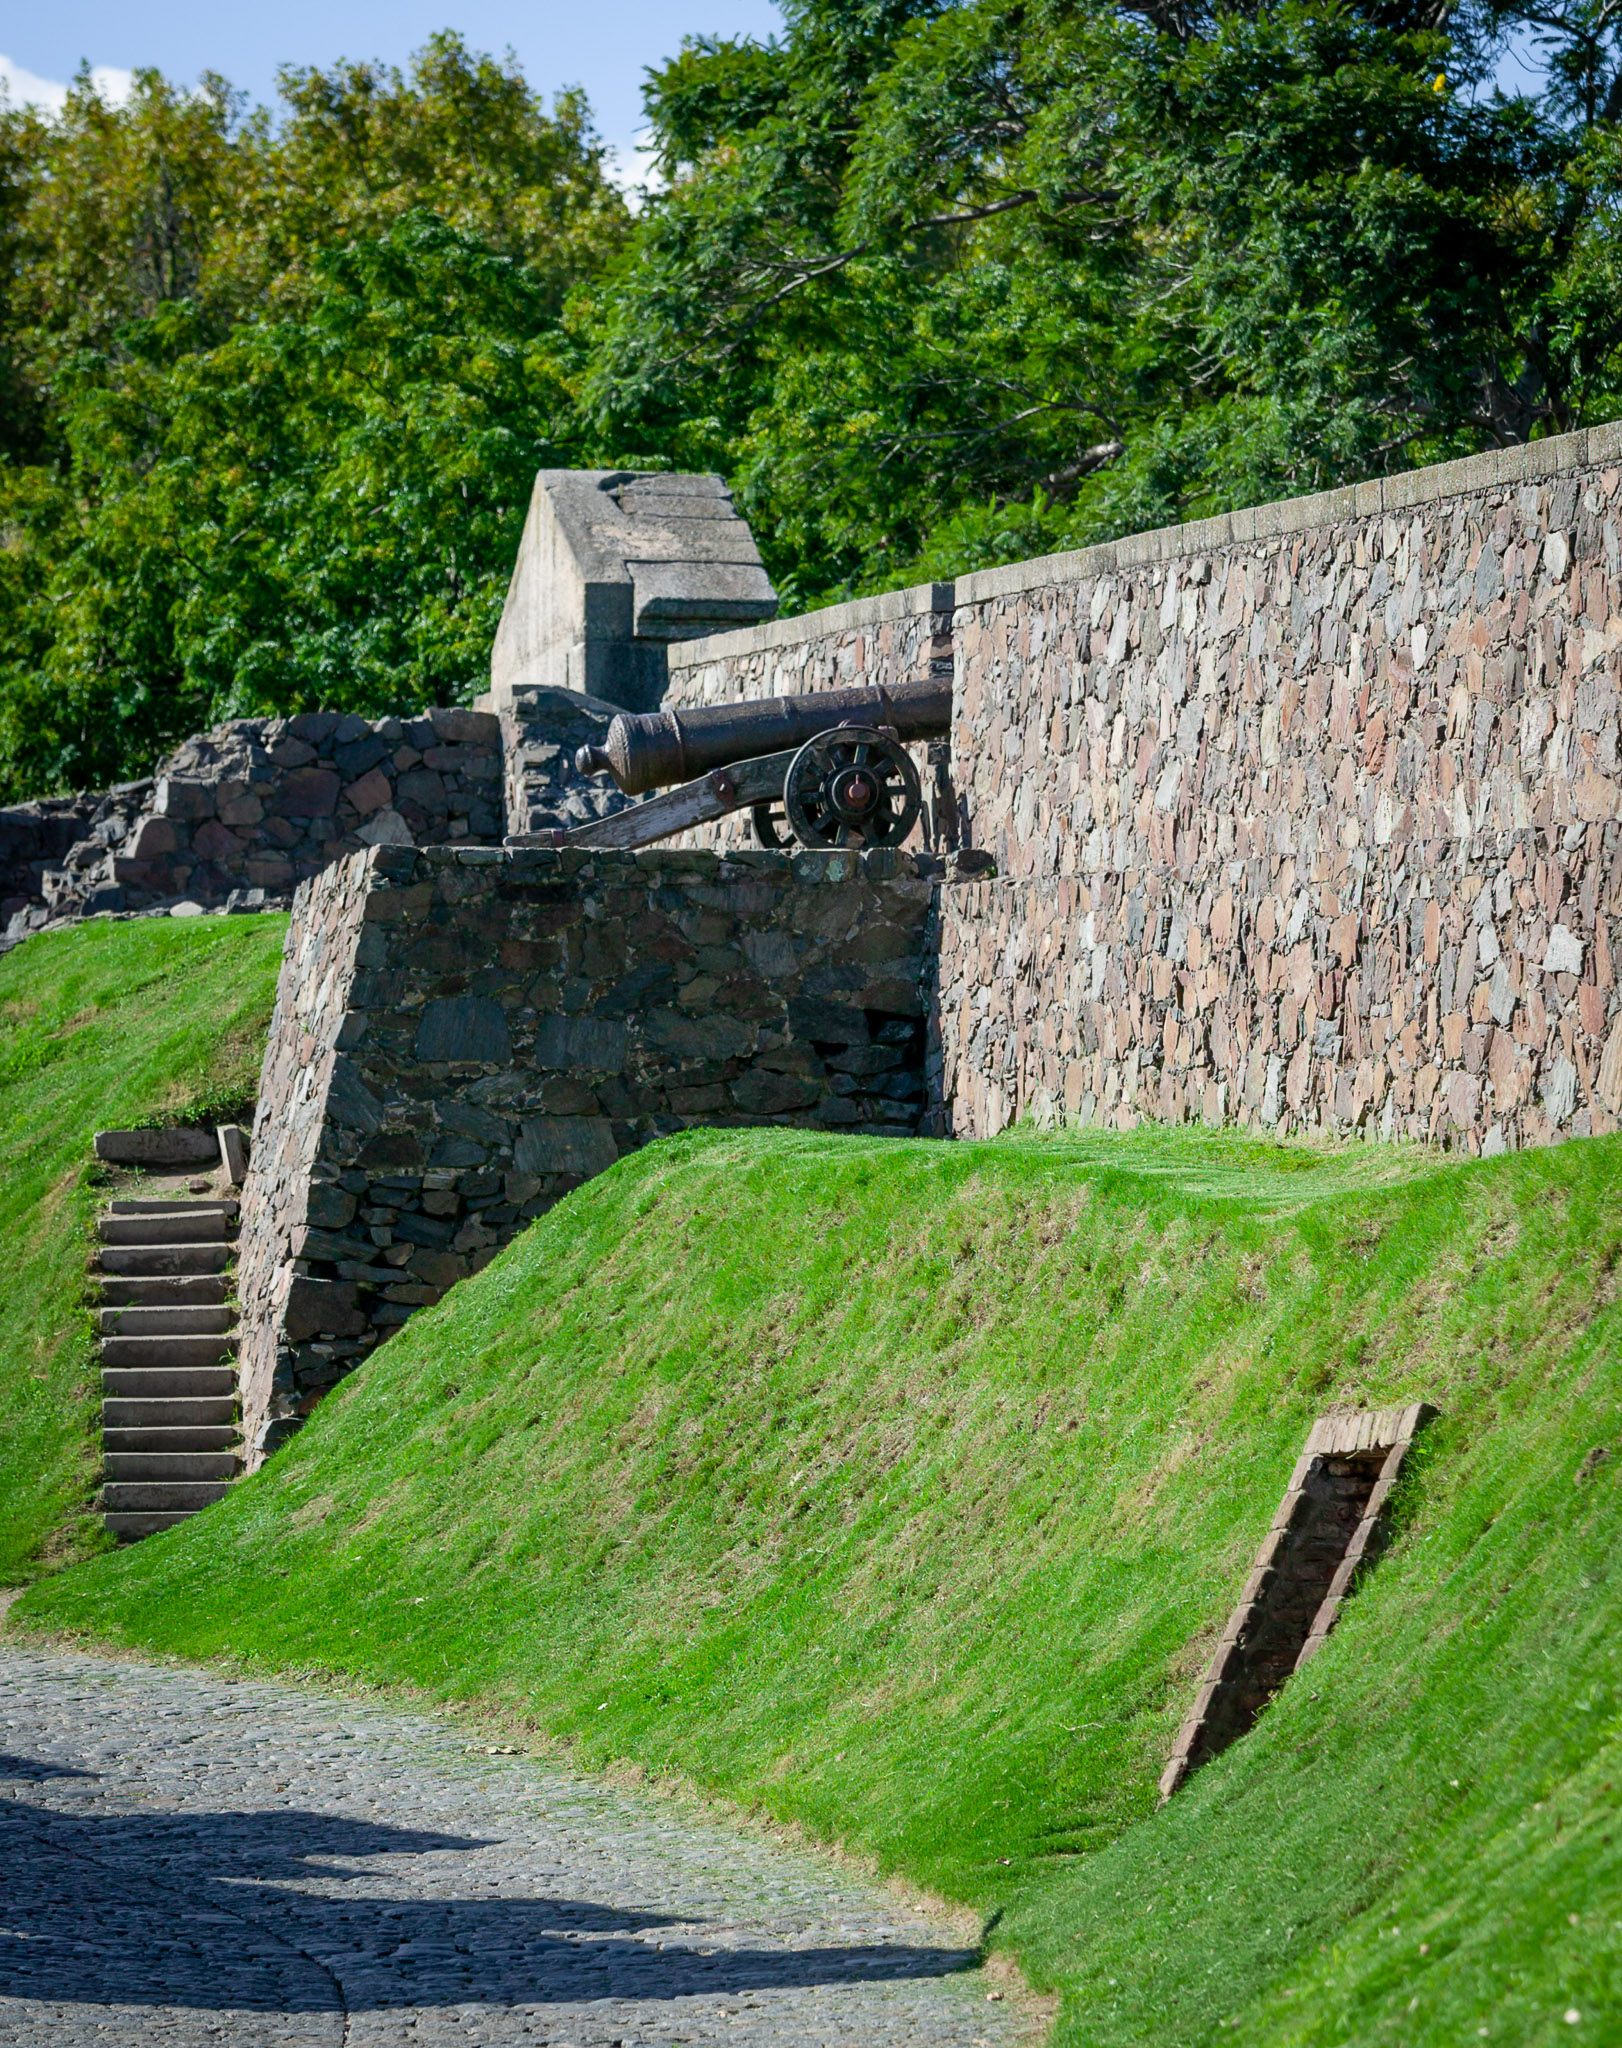 Colonia wall